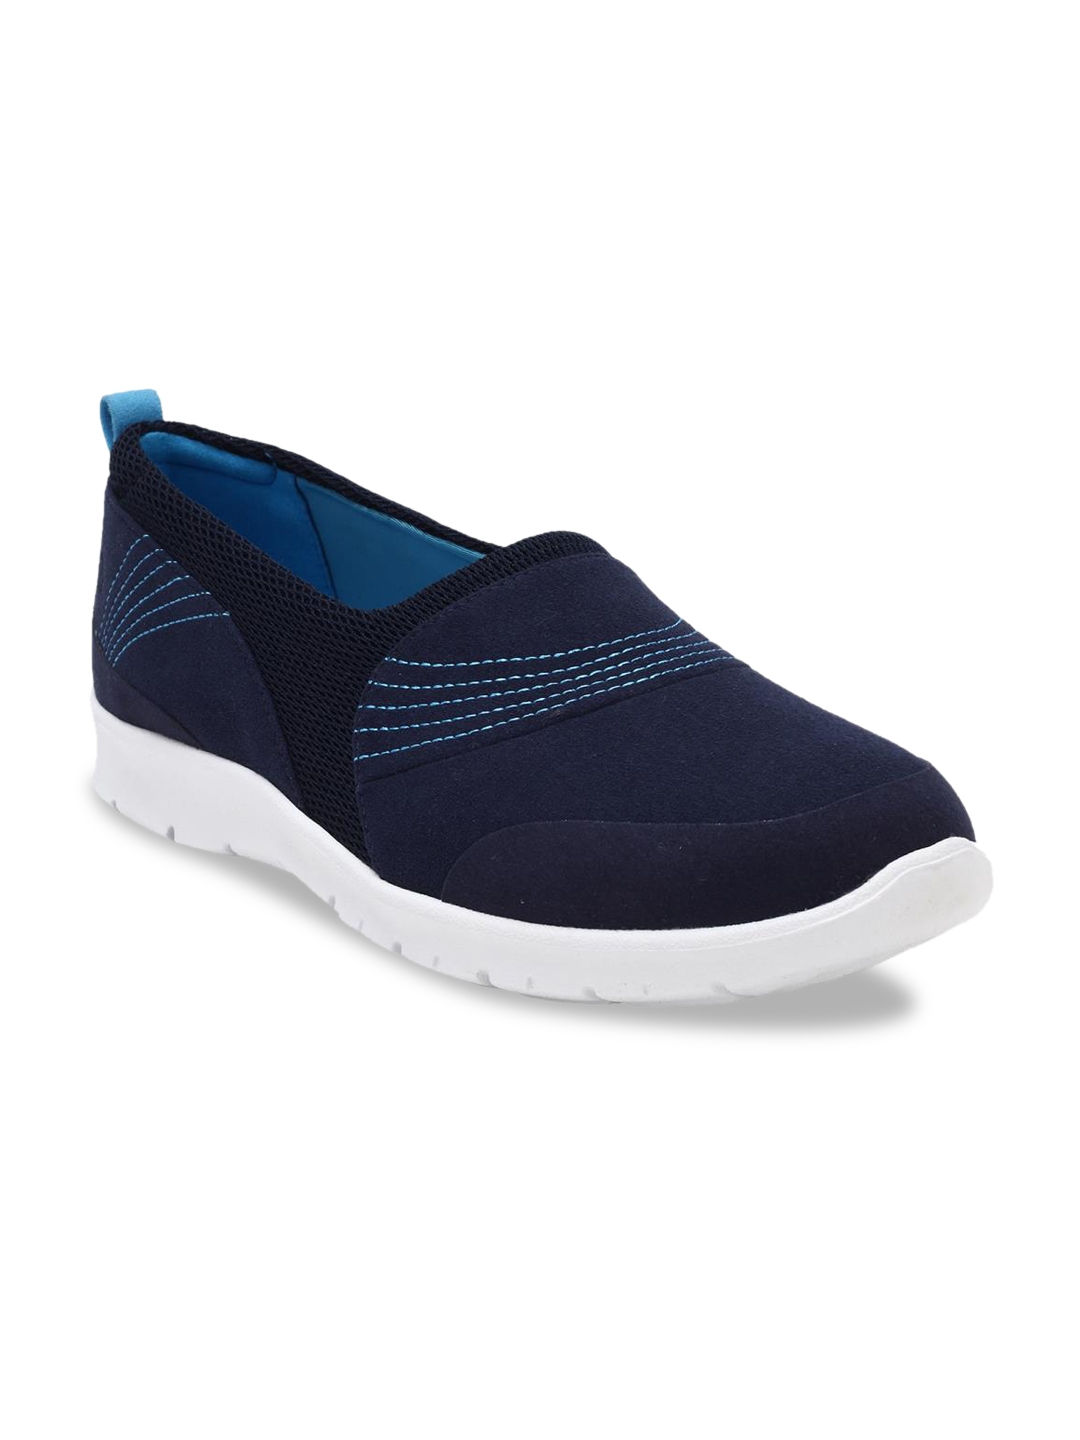 Buy Clarks Women Navy Blue Slip On Sneakers - Casual Shoes for Women ...